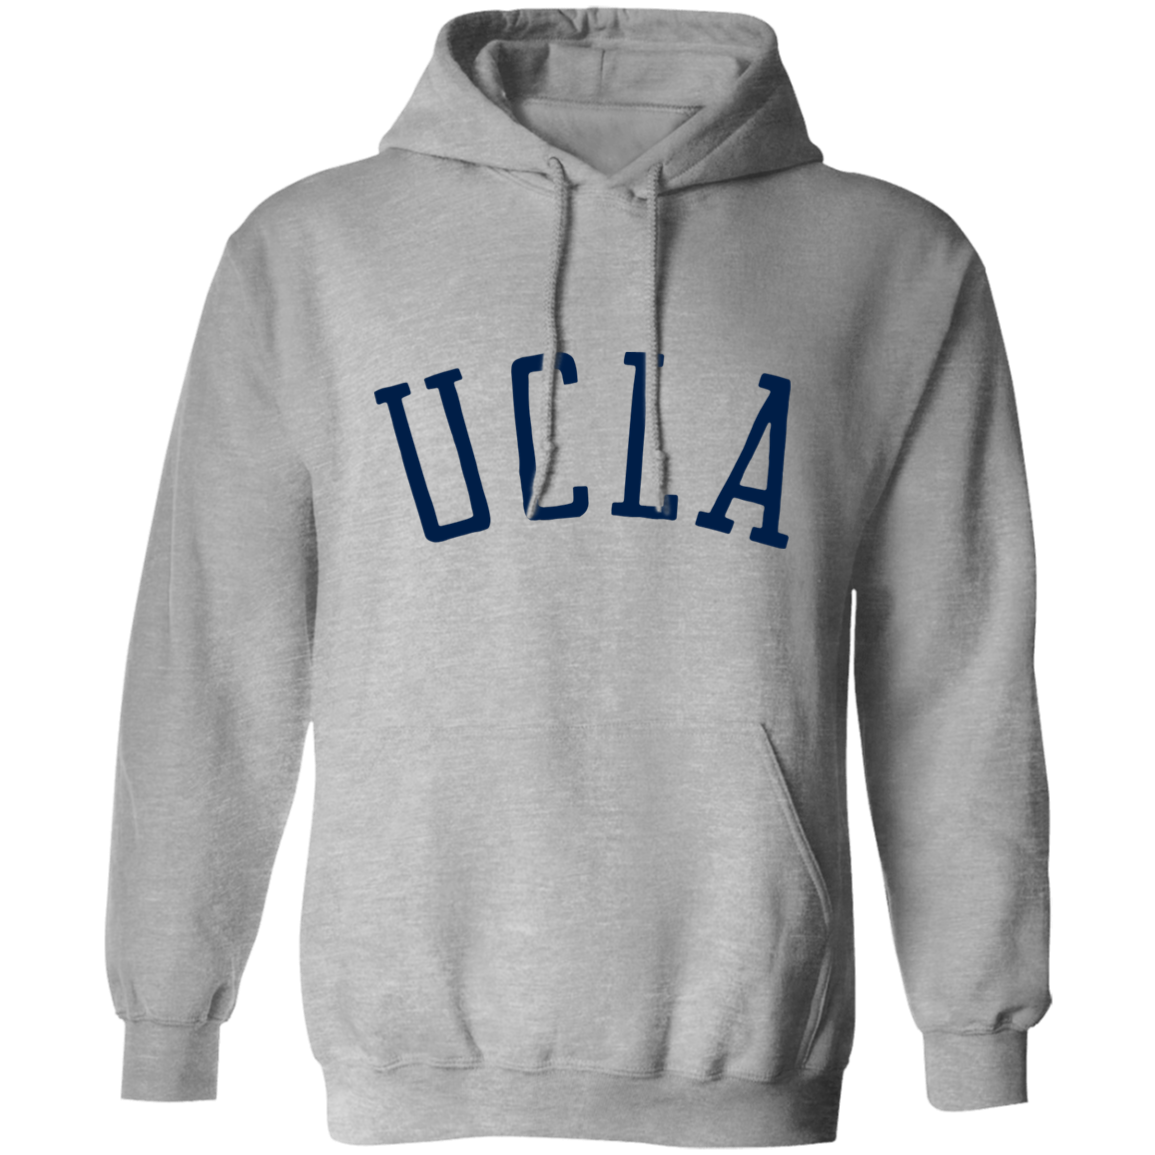 UCLA College Hoodie  Pullover Hoodie, Birthday Gift for Him, Unisex College Sweatshirt